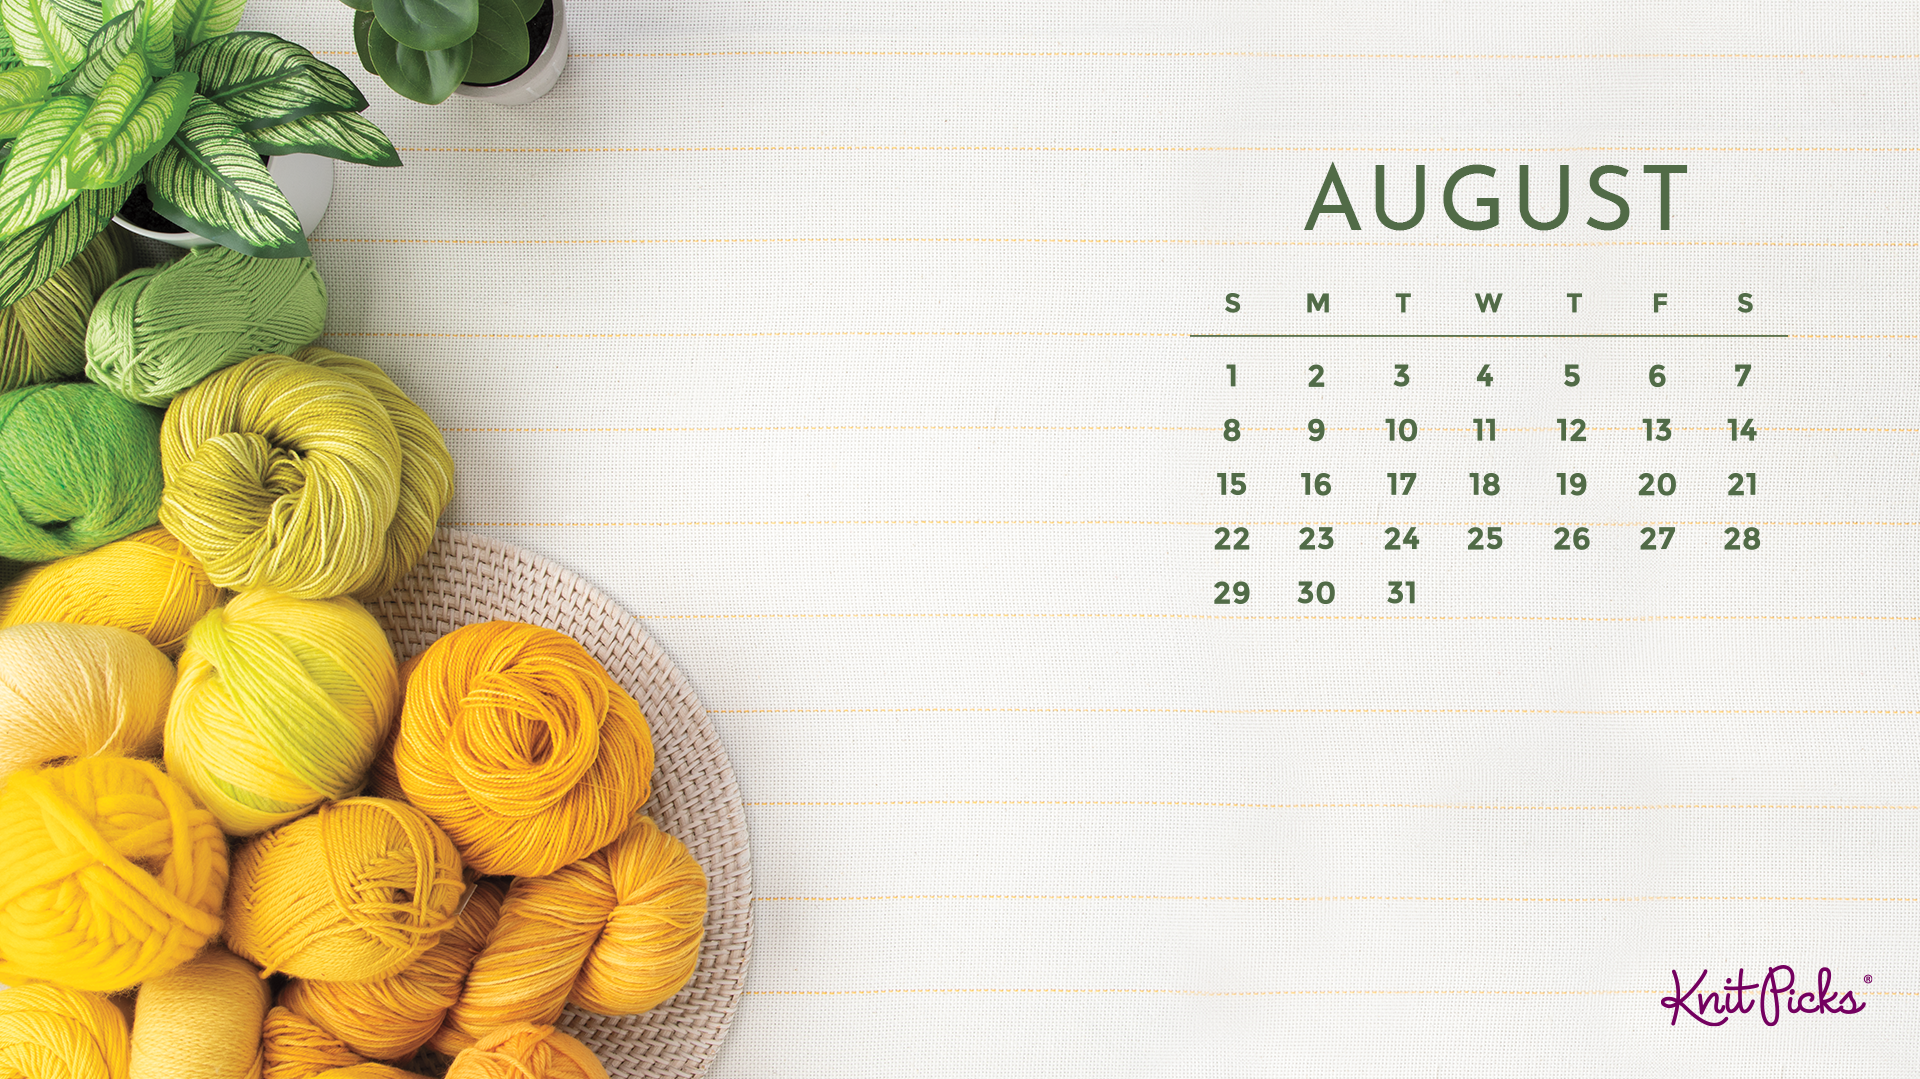 Free Downloadable August 2021 Calendar - KnitPicks Staff Knitting Blog